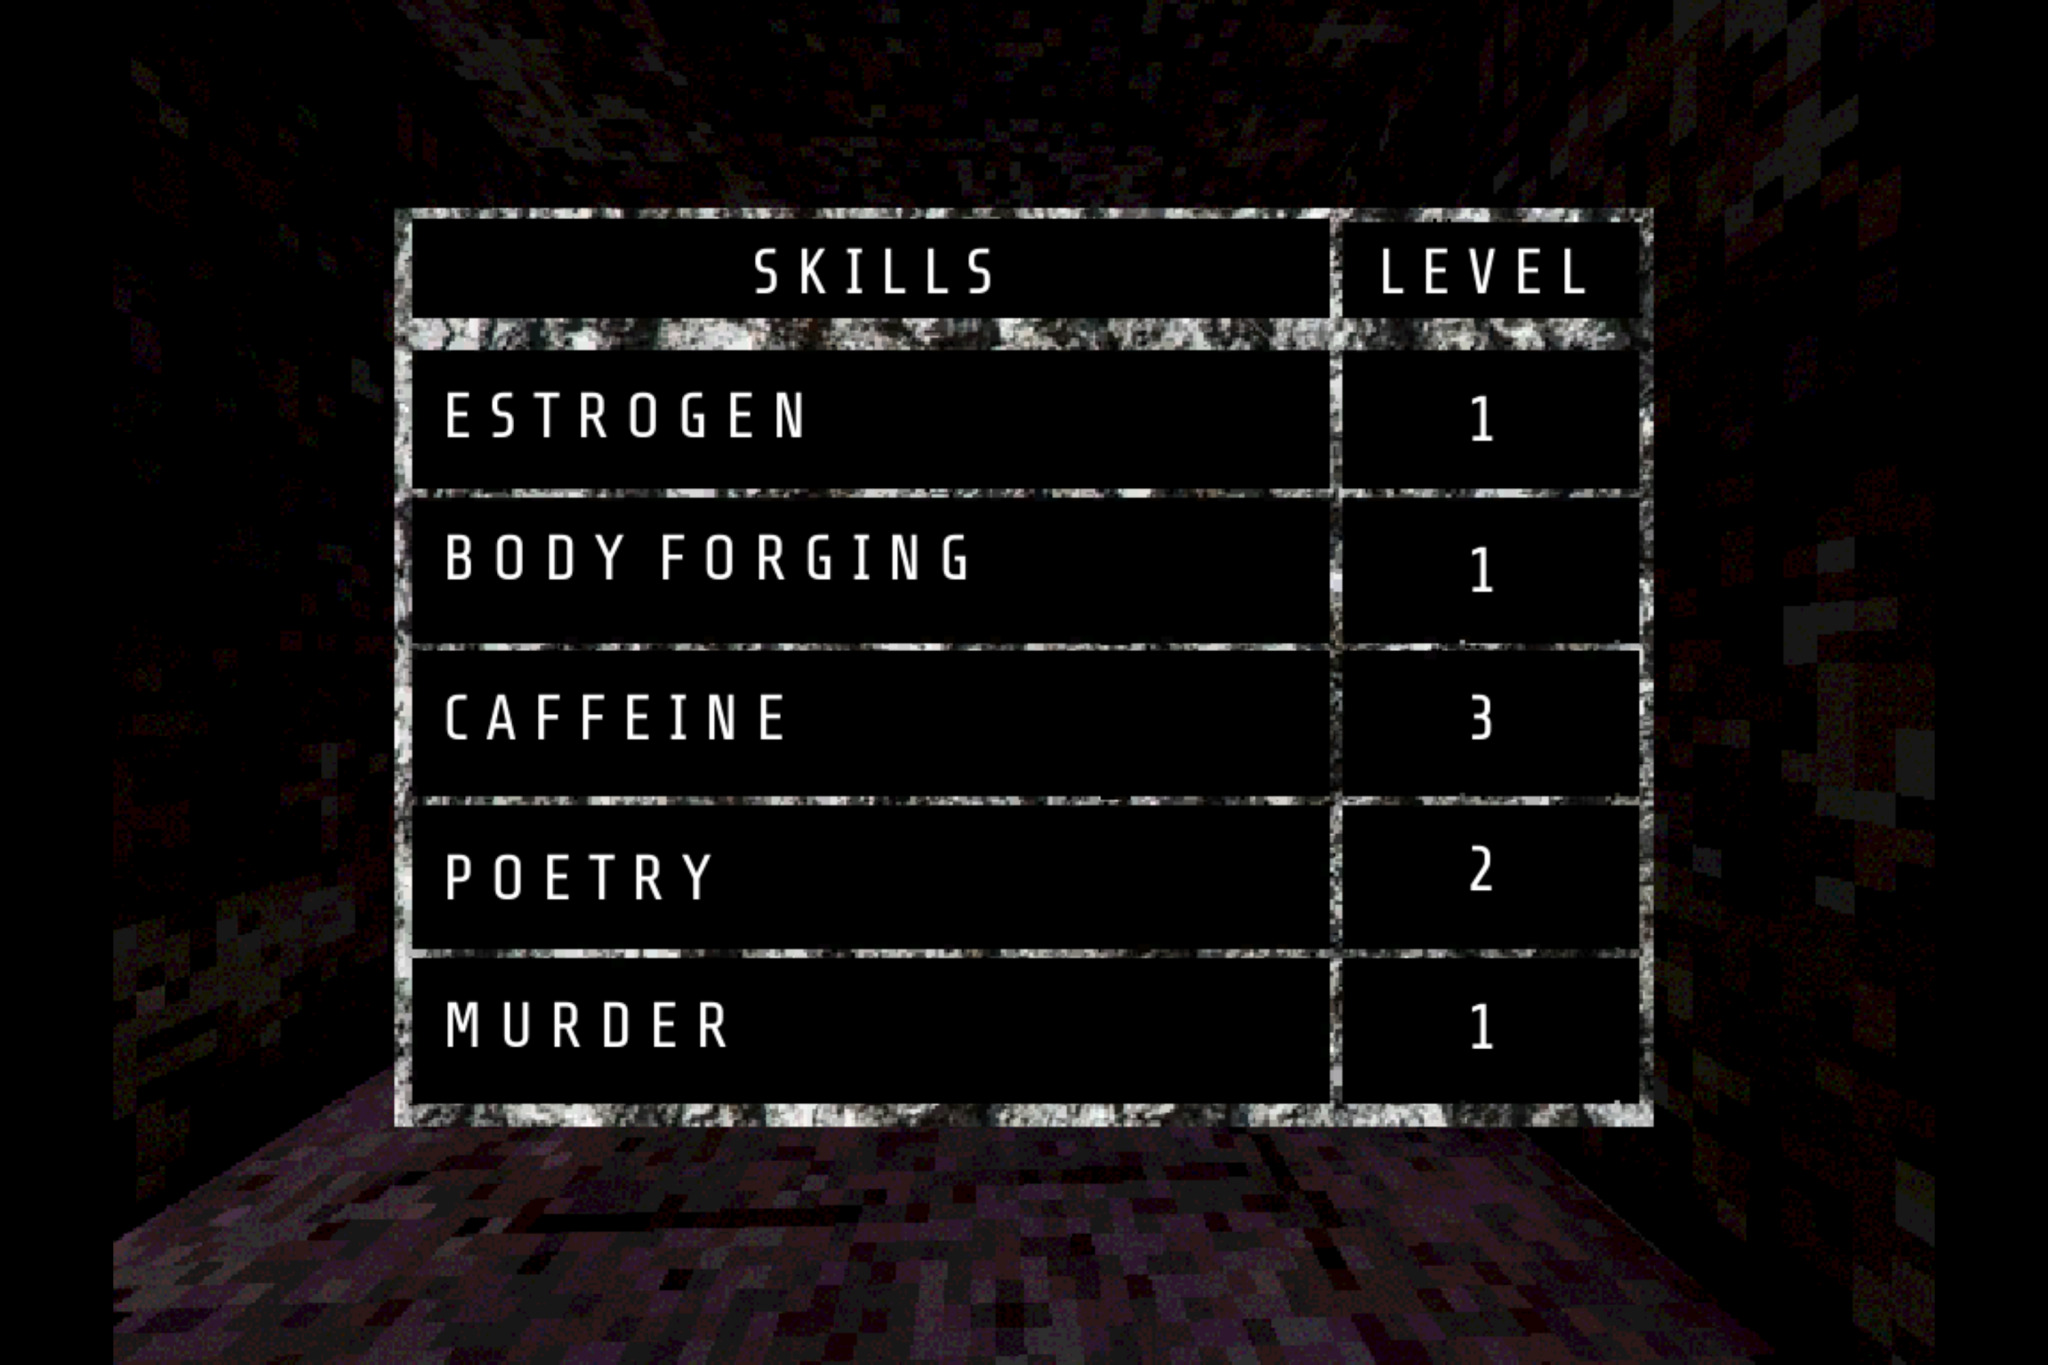 skills list with: estrogen, body forging, caffeine, poetry, and murder